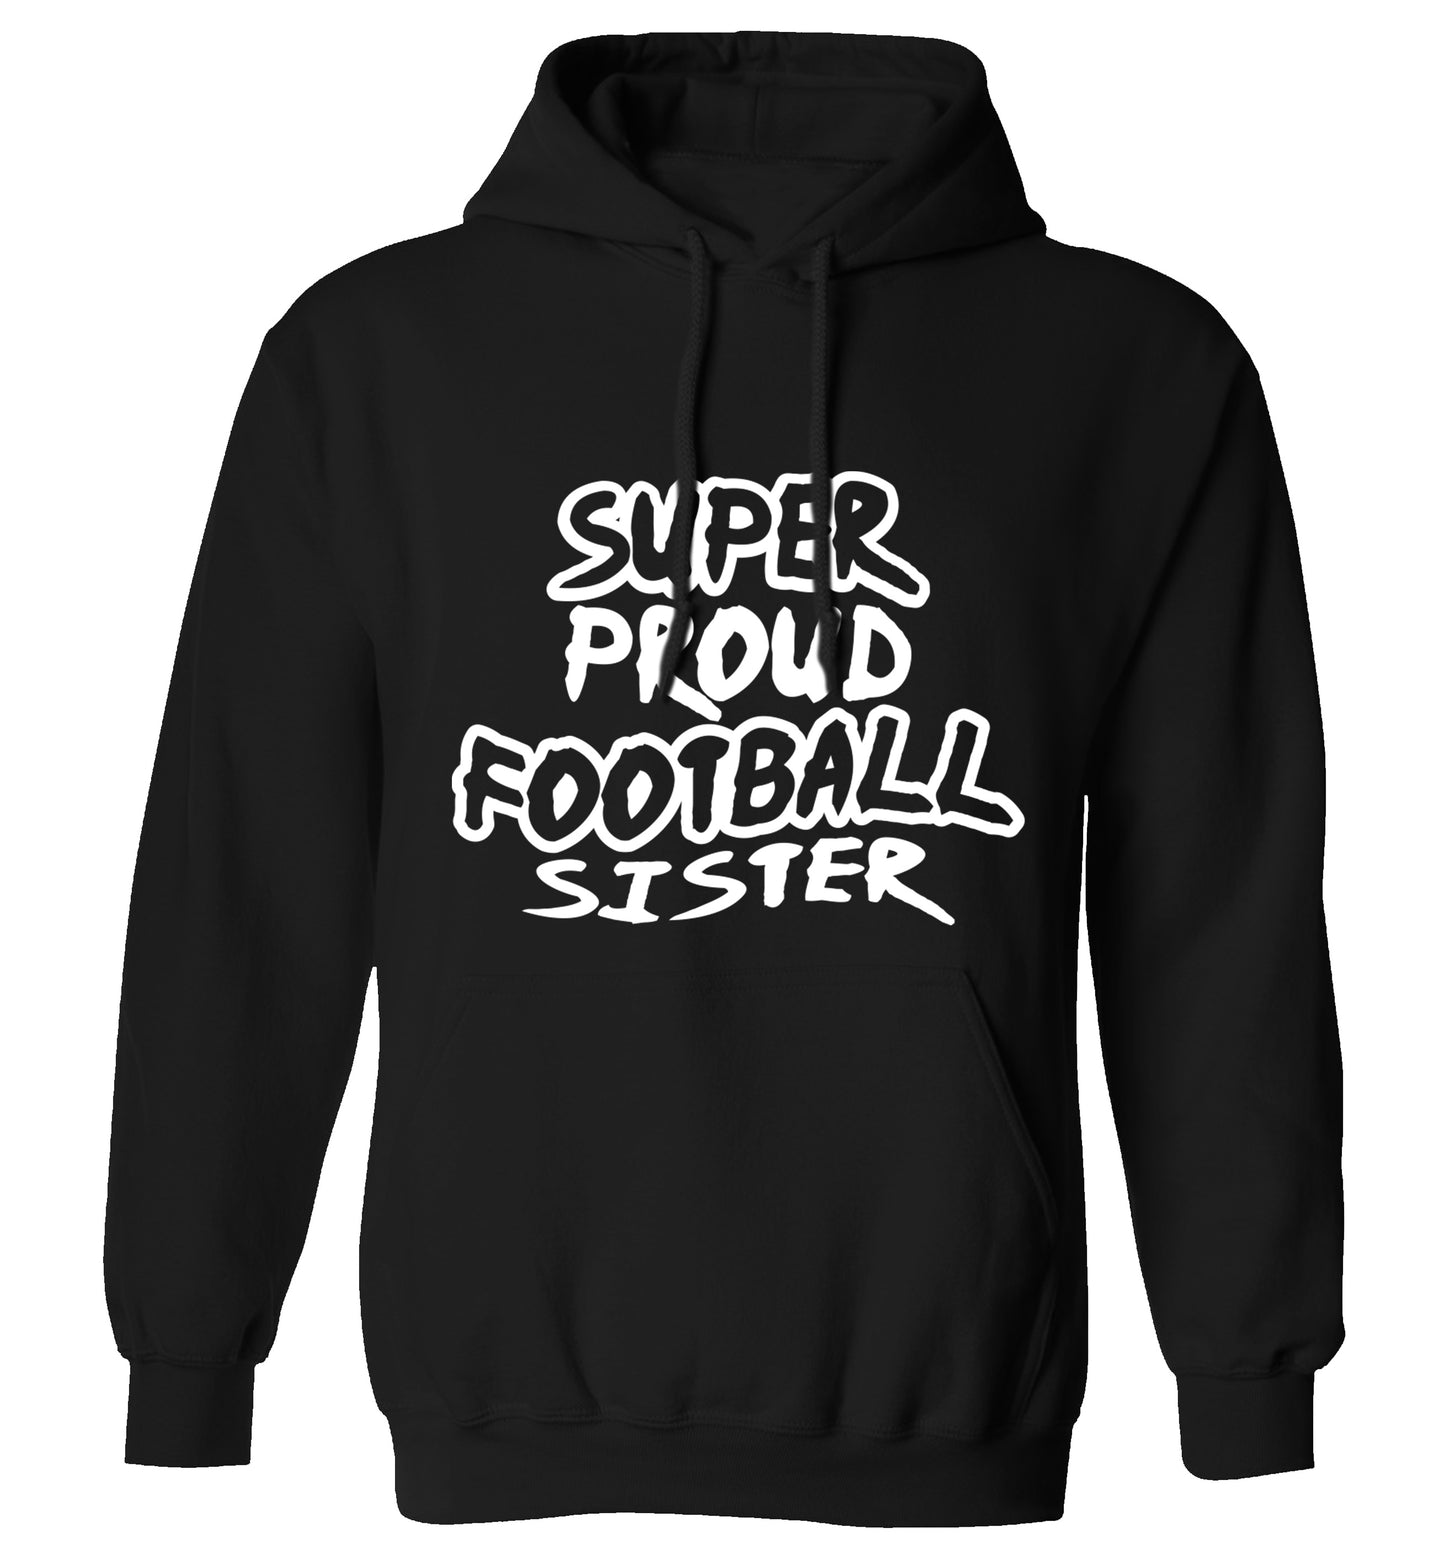 Super proud football sister adults unisexblack hoodie 2XL